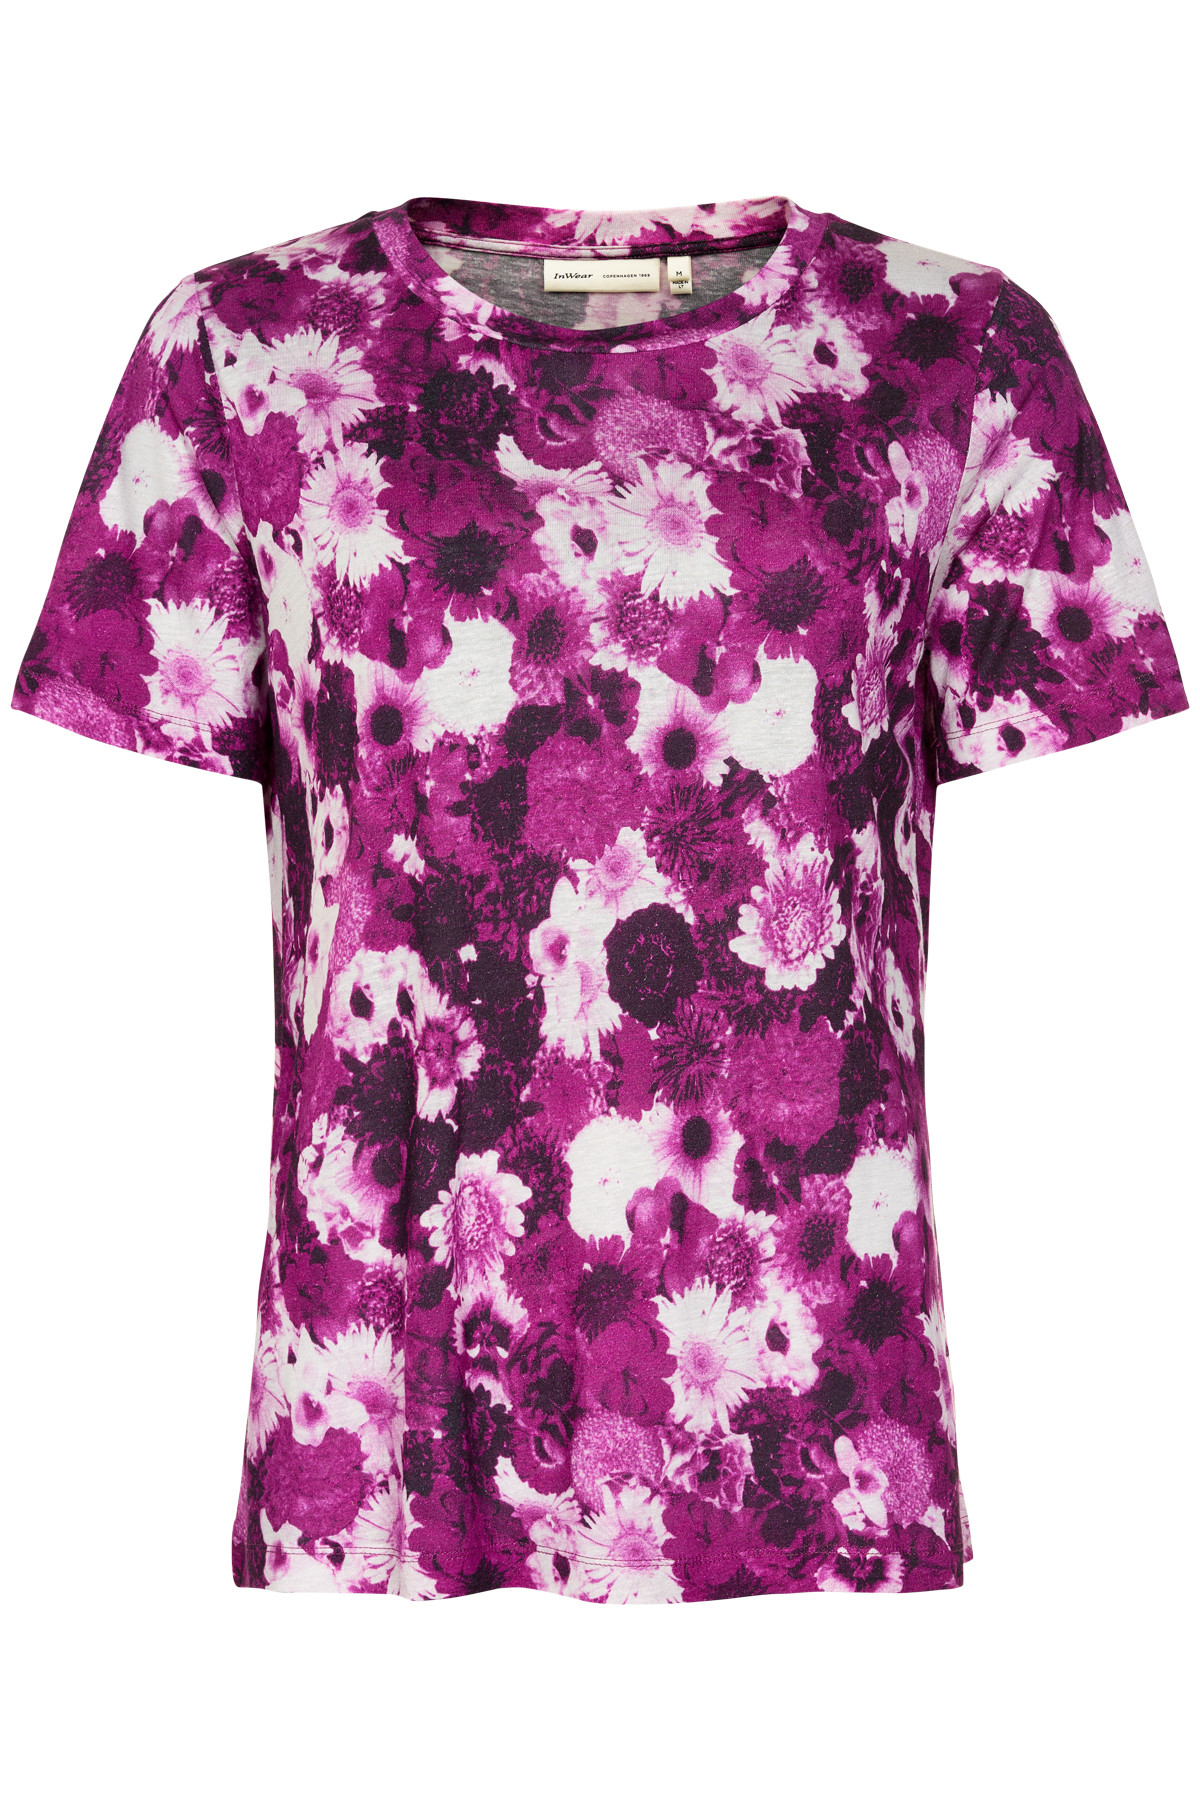 Inwear Rosita T-shirt C, Farve: Cerise Pink, Størrelse: XS, Dame